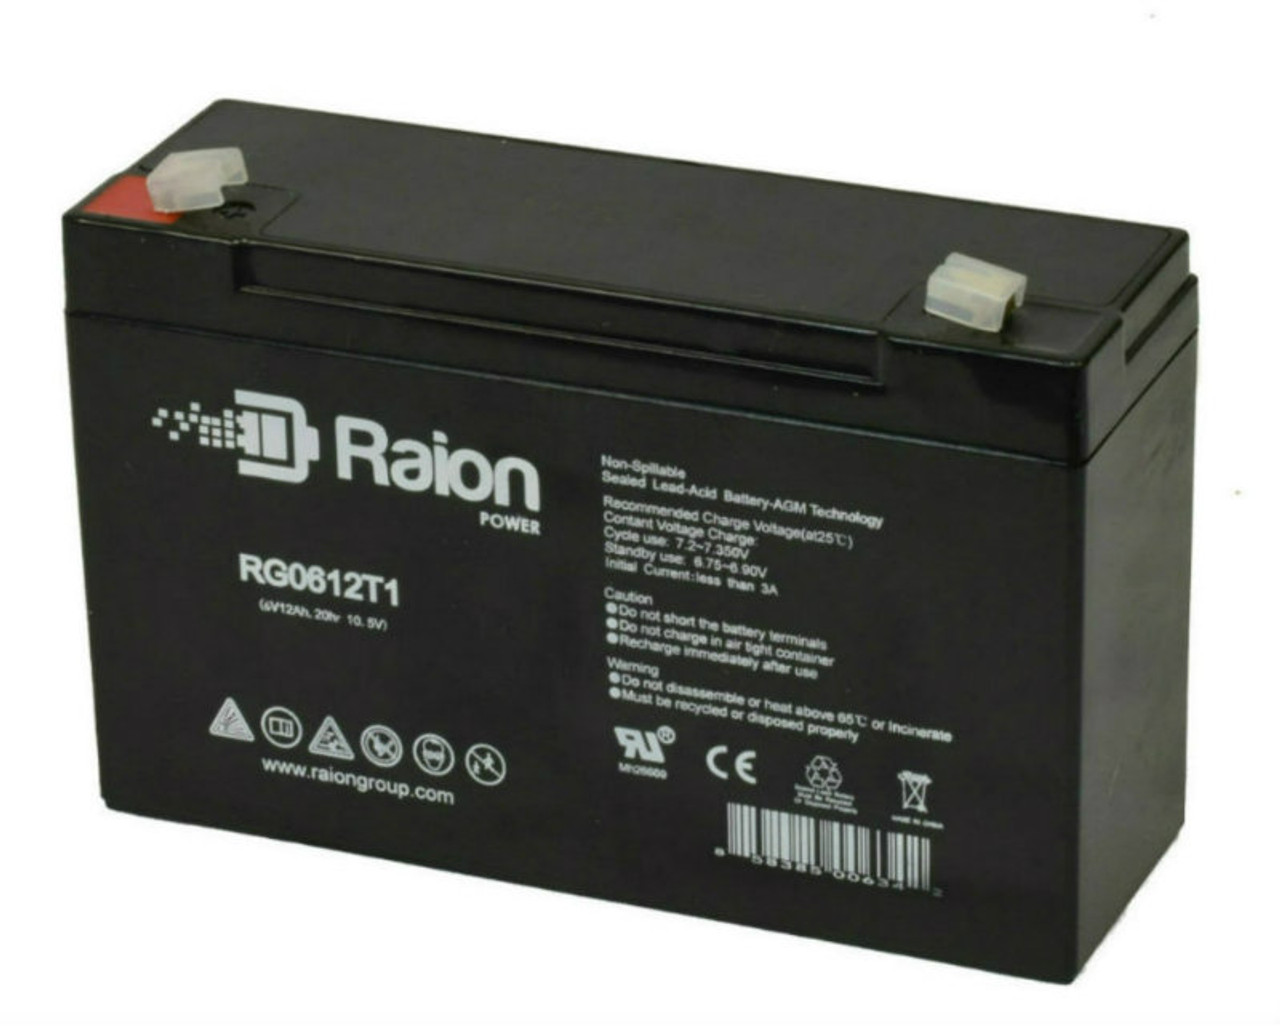 Raion Power RG06120T1 6V 12Ah Replacement UPS Battery Cartridge for Sola 600VA